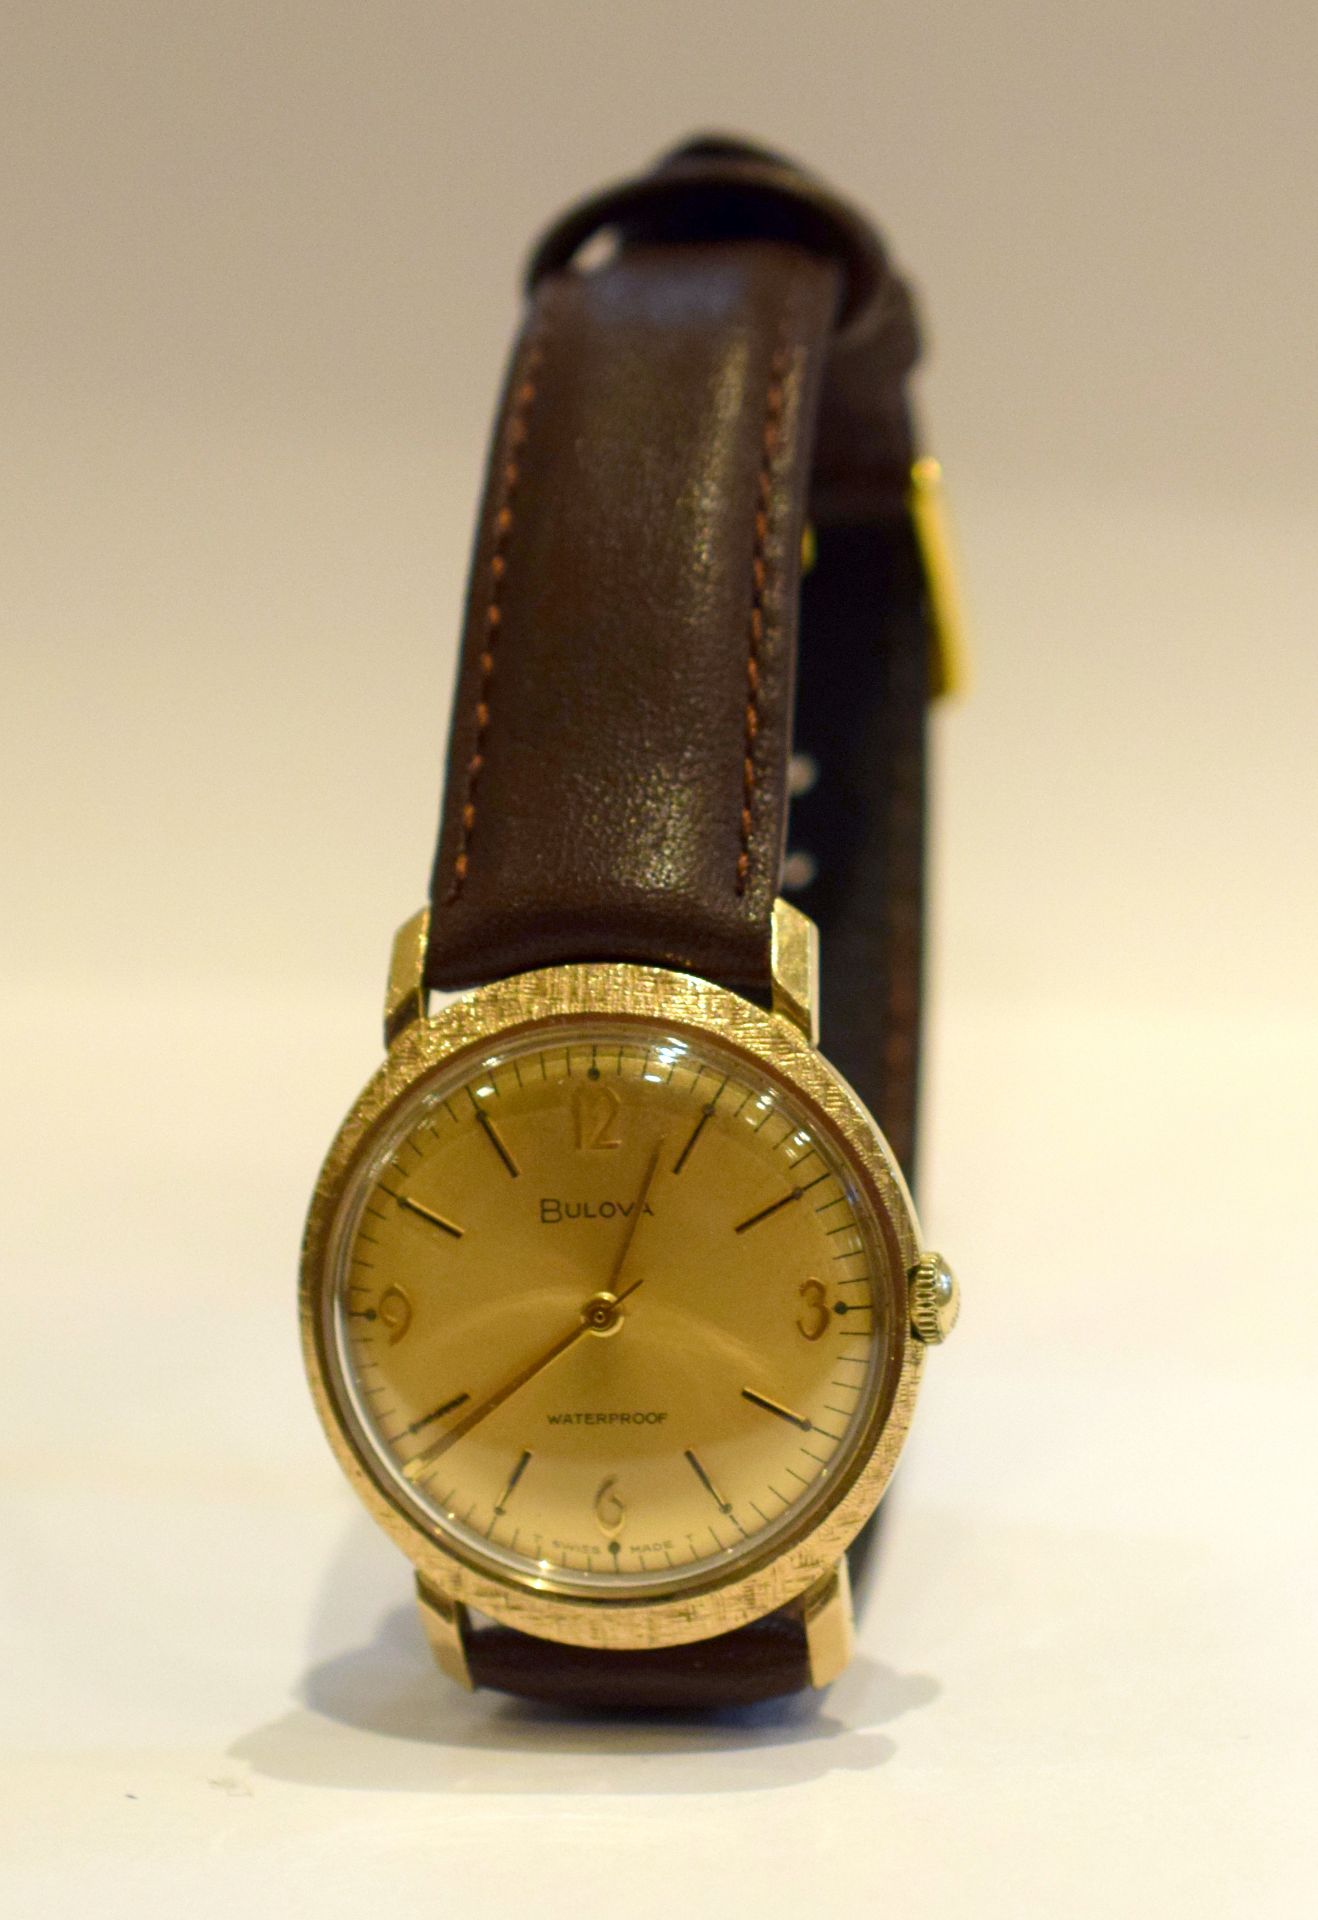 Vintage Bulova Manual Wind Gentleman's Wristwatch - Image 2 of 5